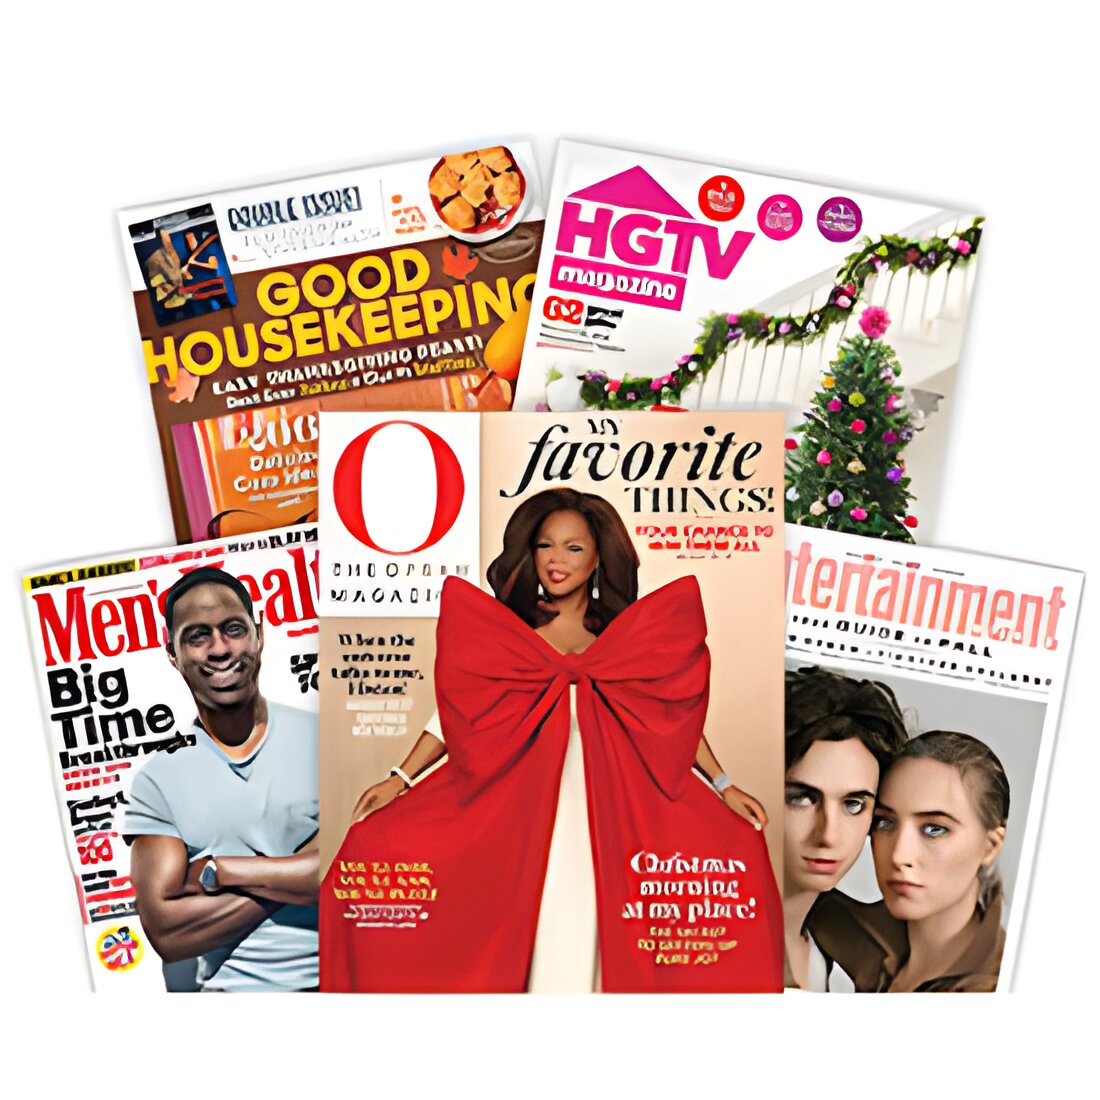 Free Magazine Subscription (Cosmo, Food & Wine, Parents, Etc.)